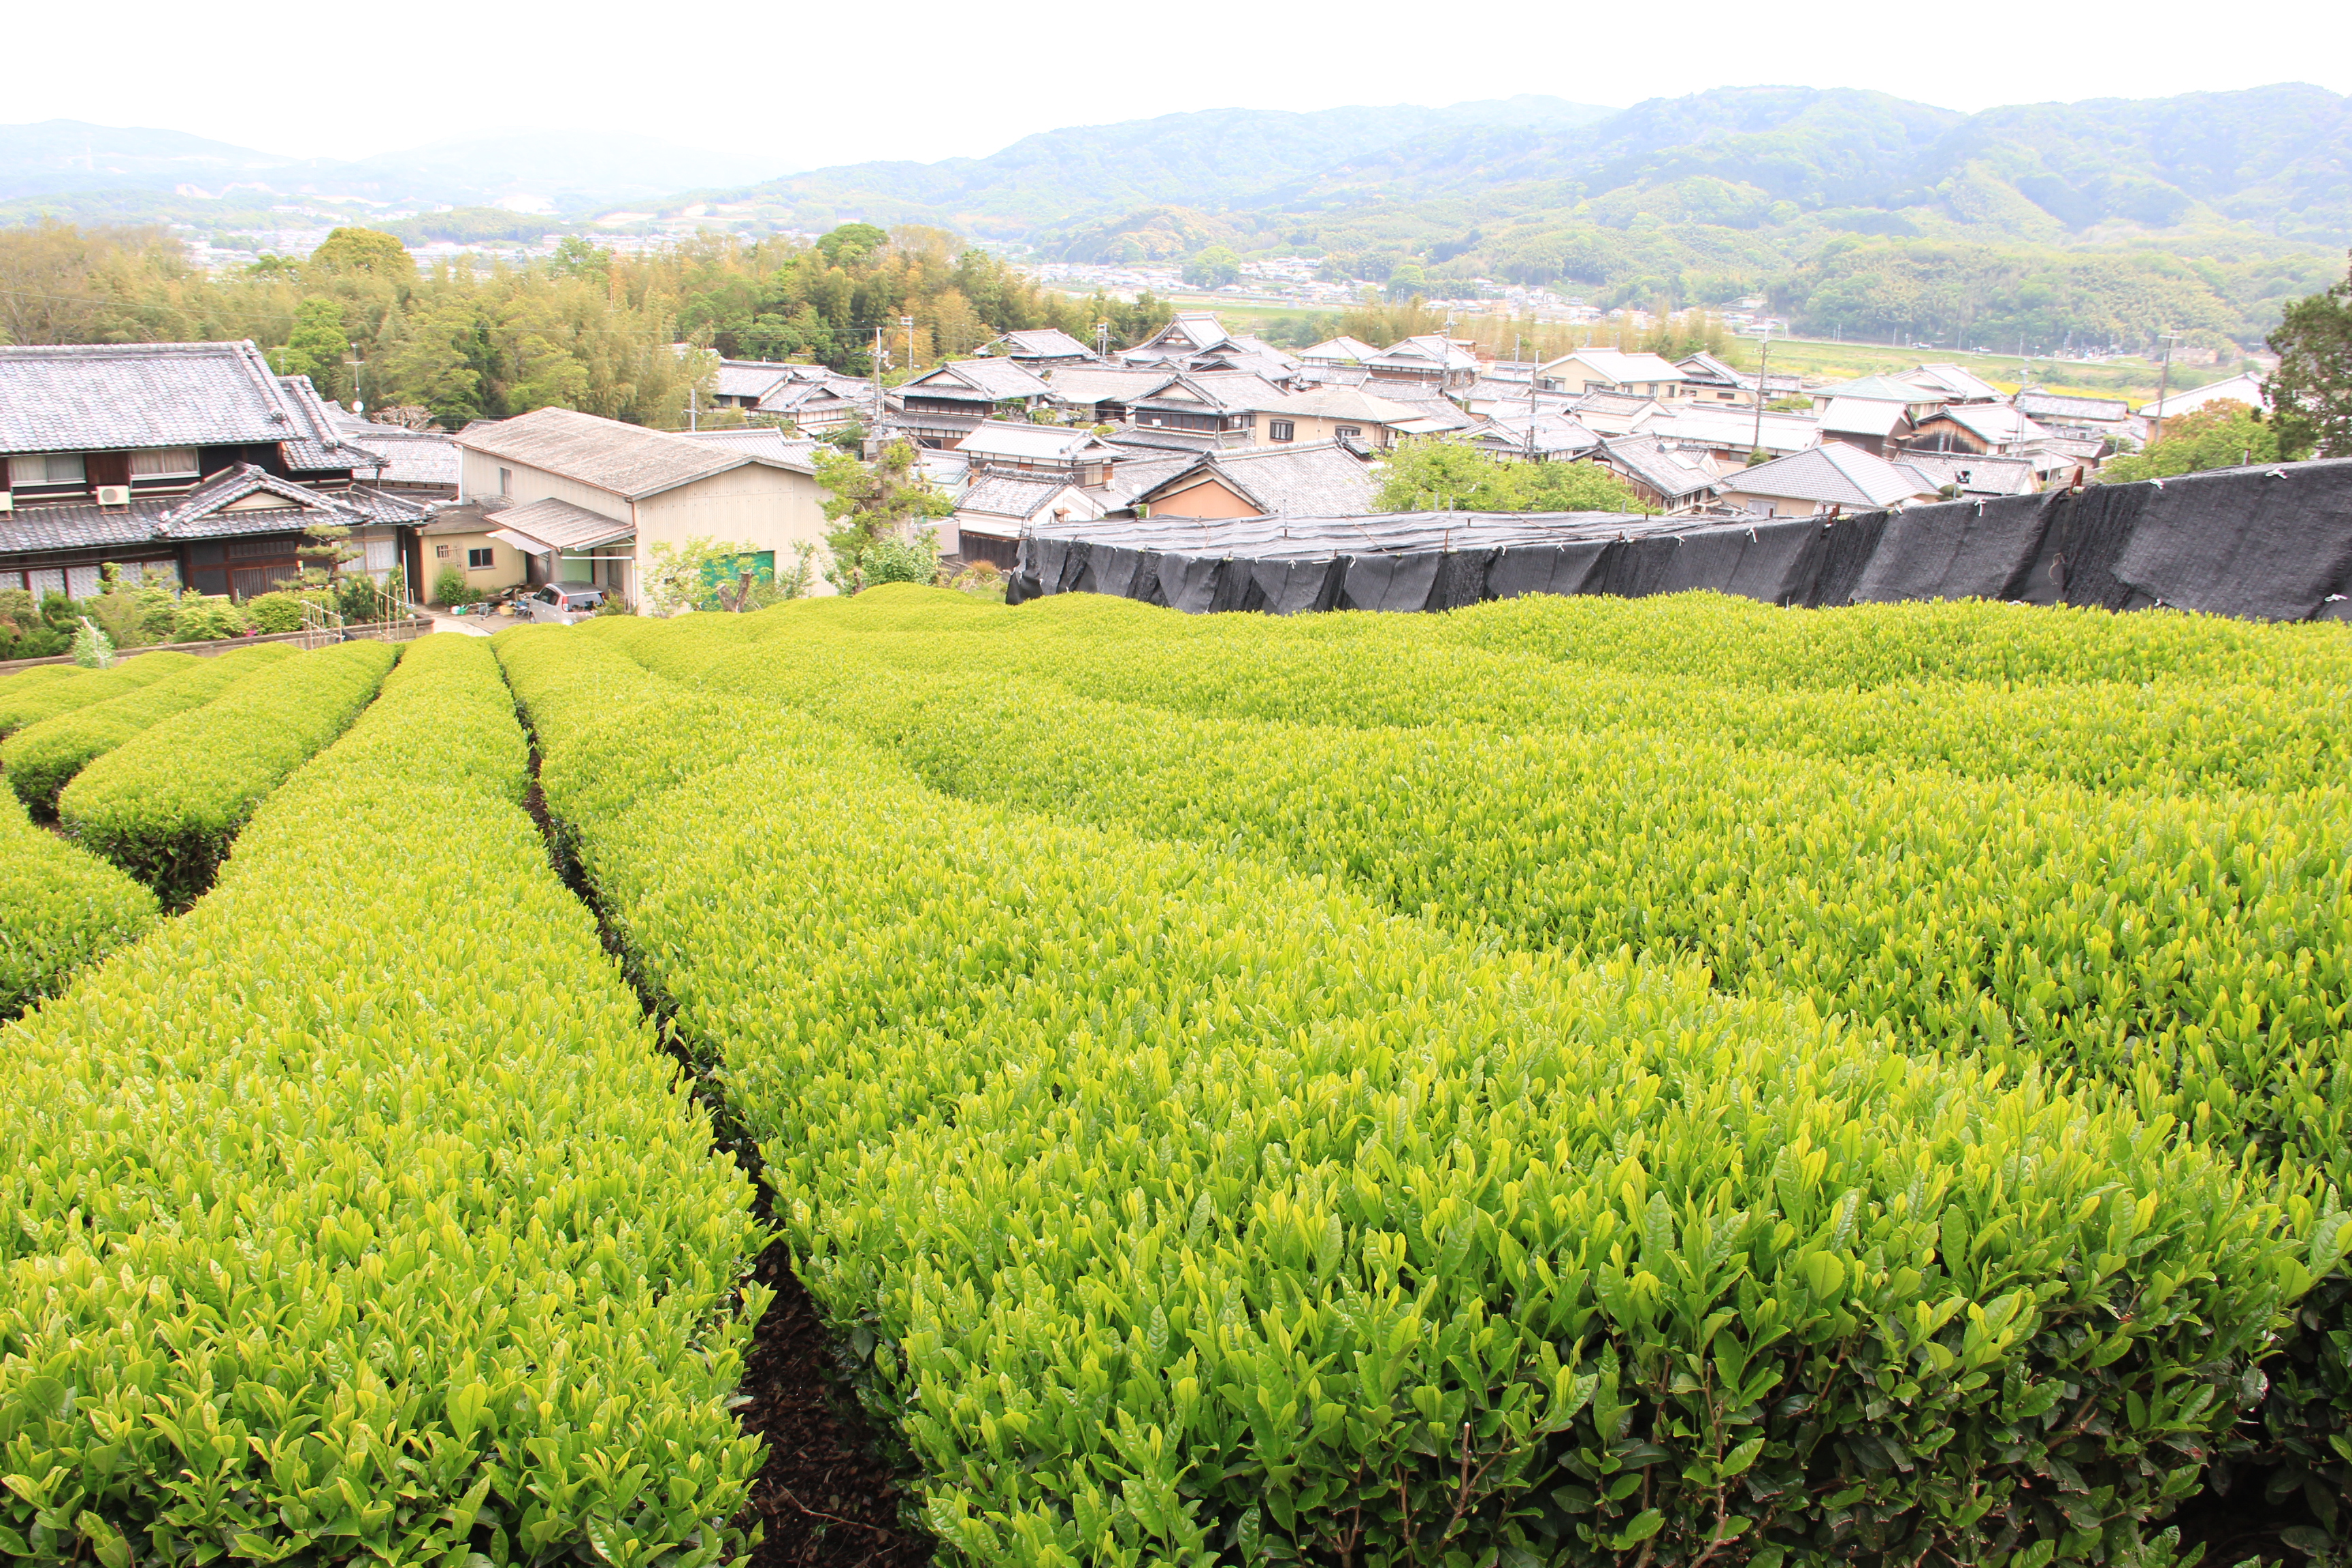 Ioka Tea Plantation Certified as a "Walk through 800 Years of Japanese Tea History" Heritage Site!